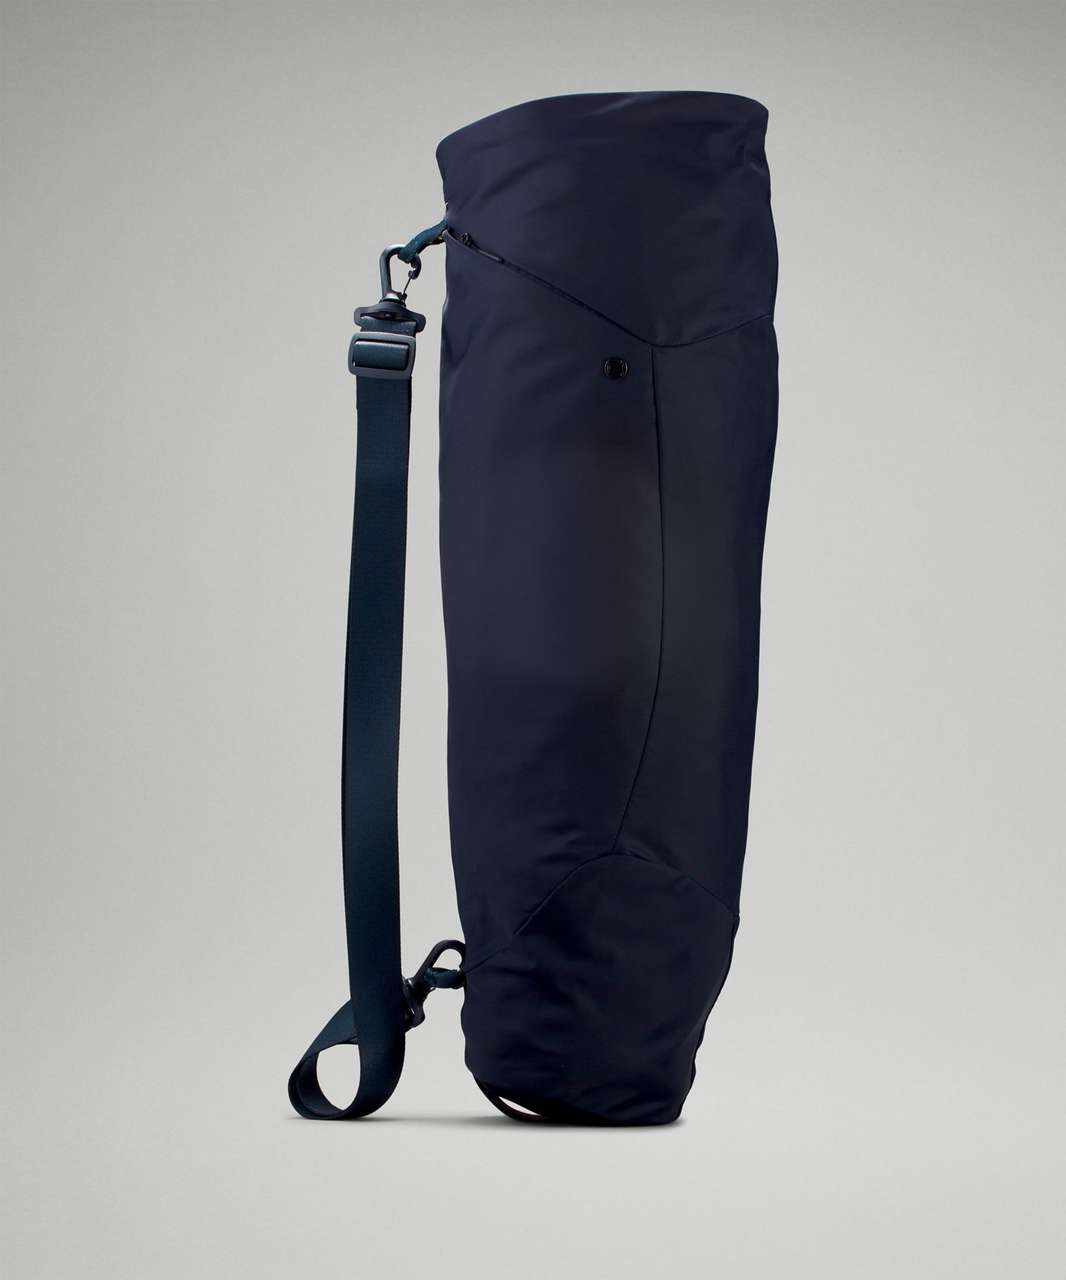 Yoga Strap For Mat Yoga Carrier Holder Straps Adjustable Exercise